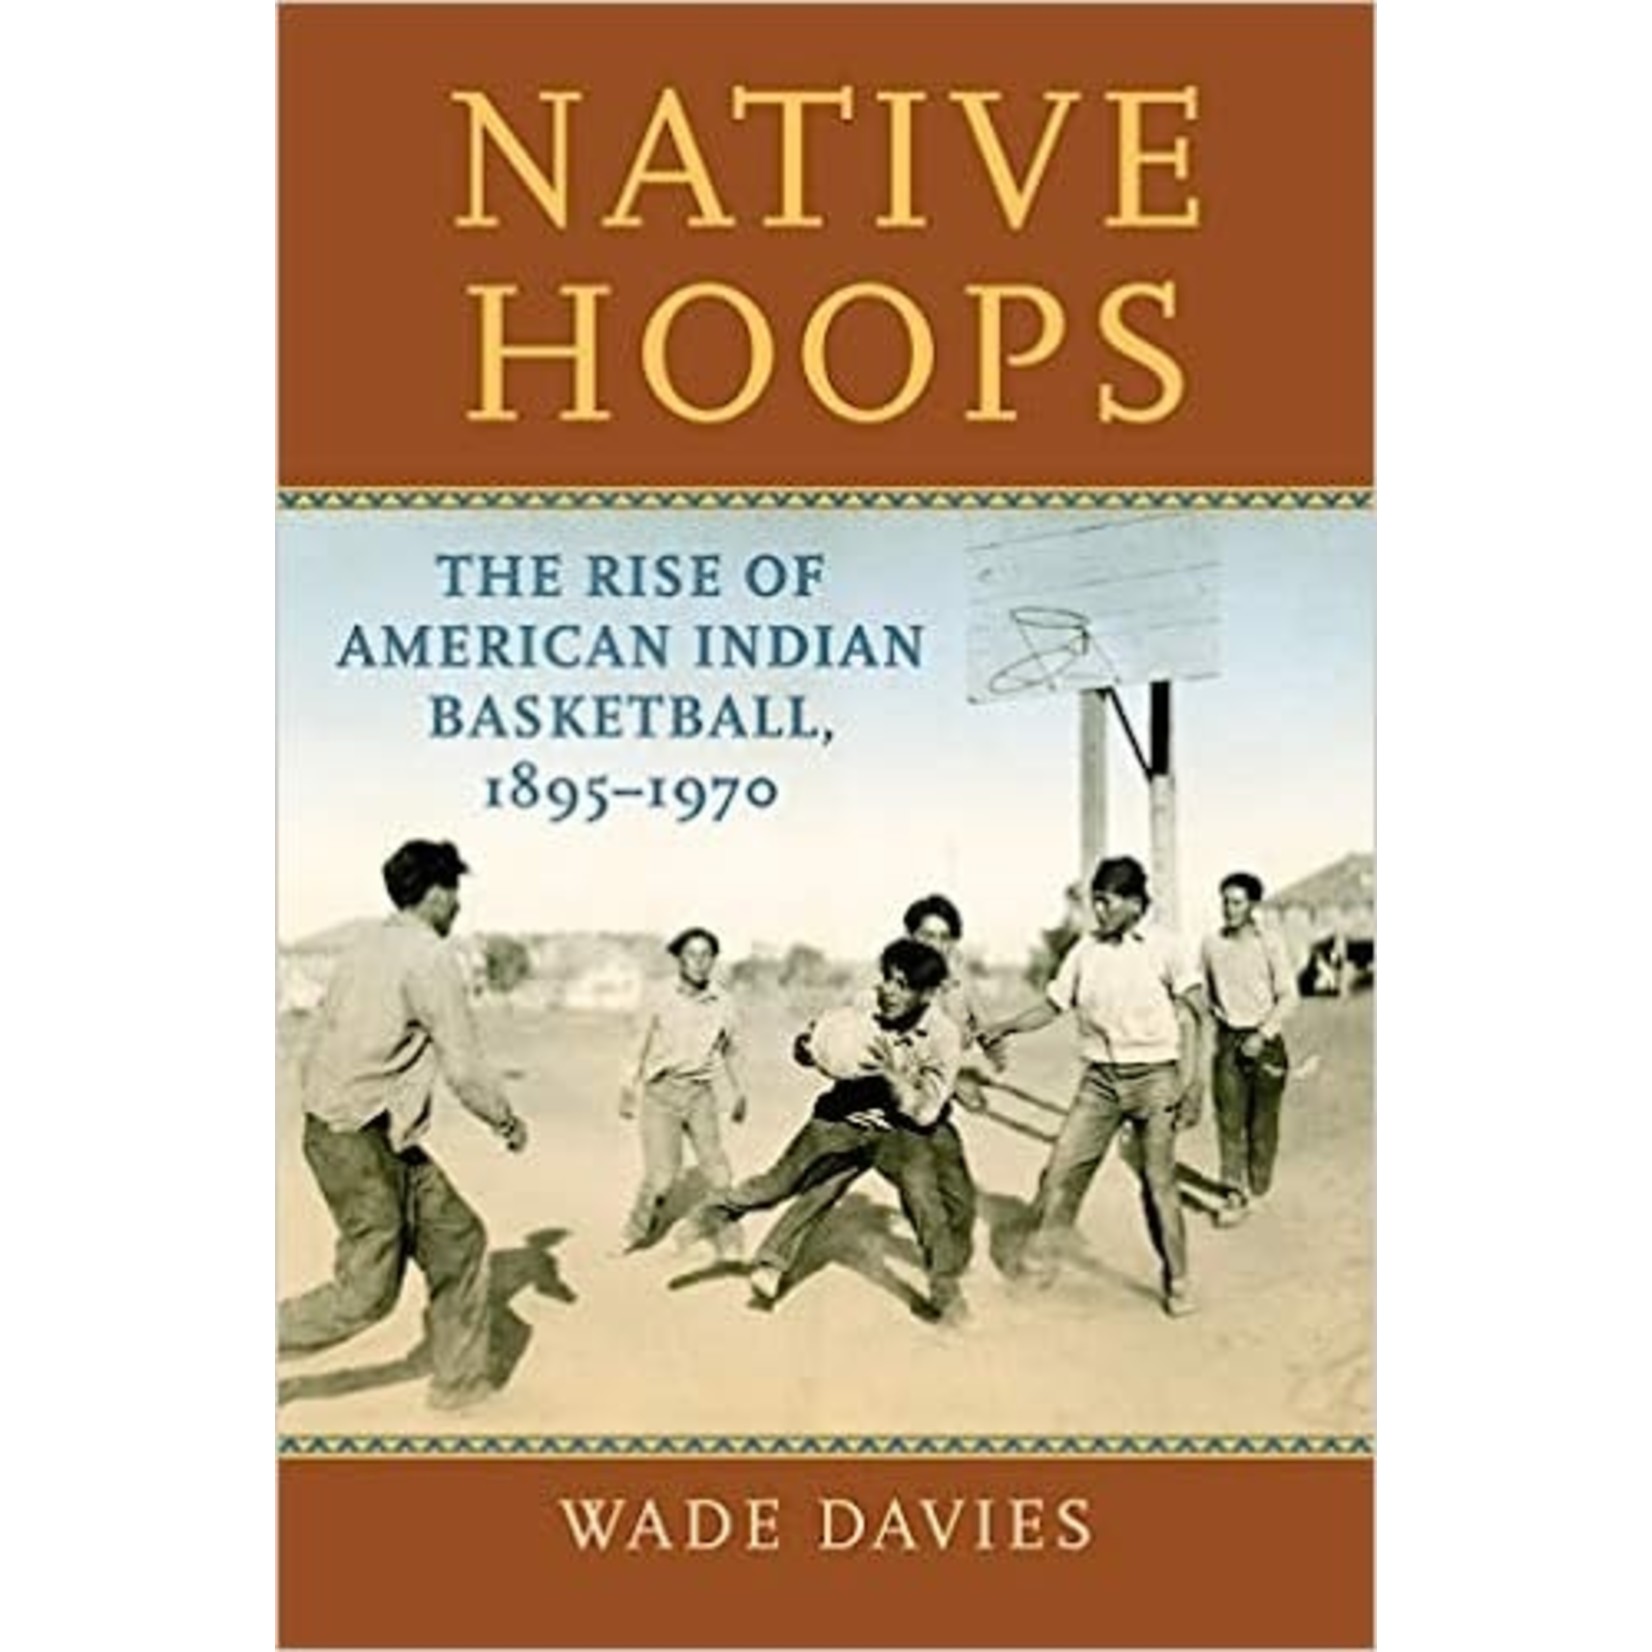 Native Hoops by Wade Davies